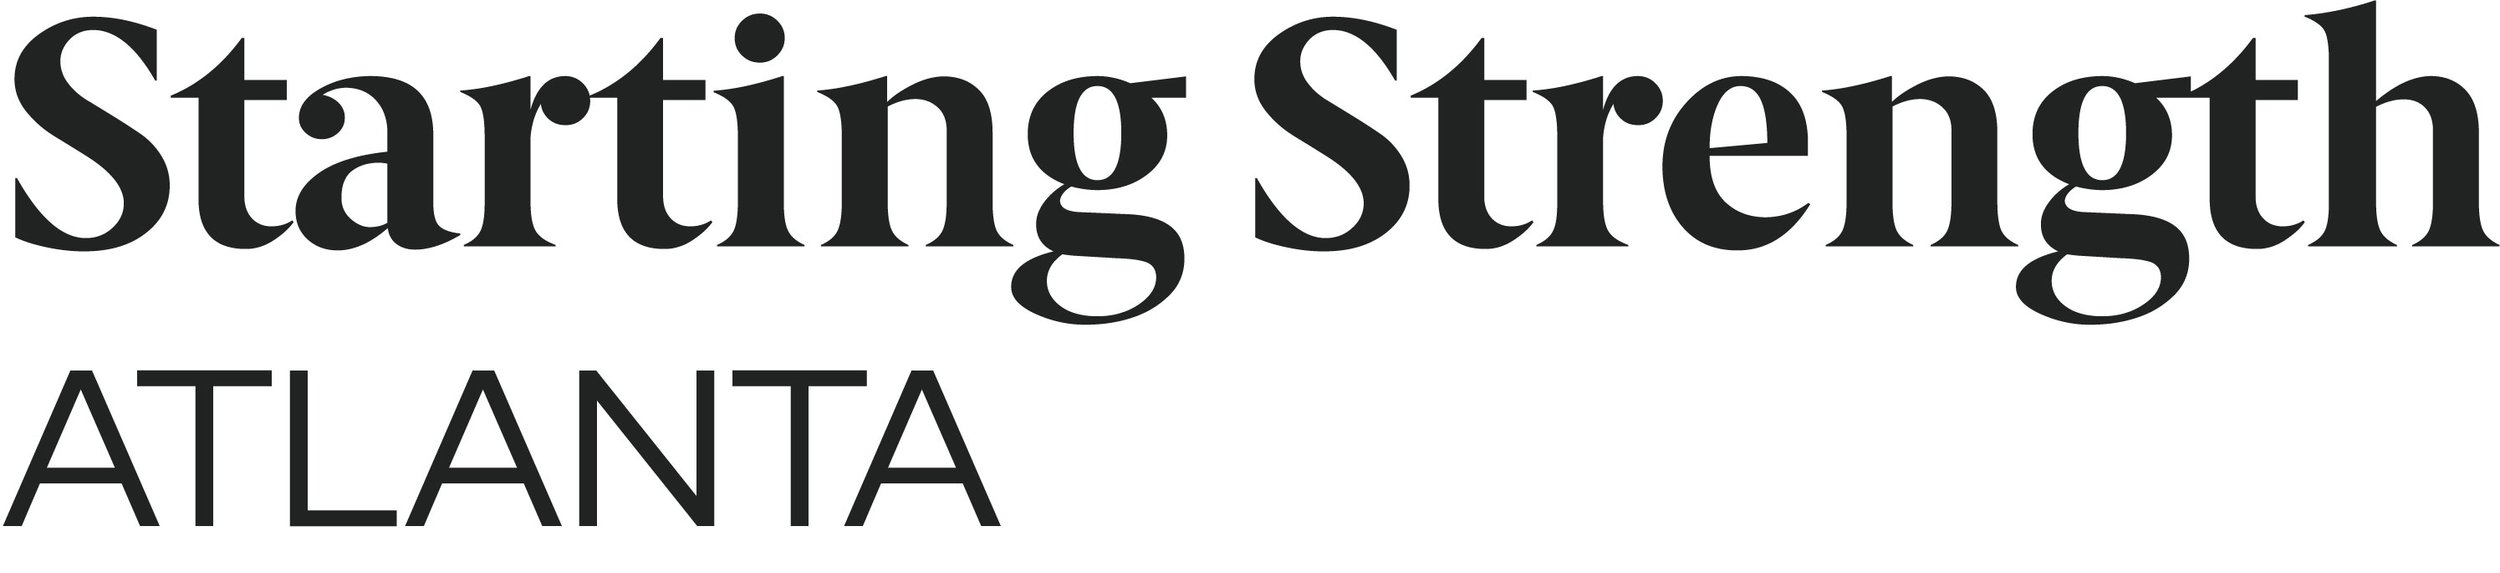 Starting Strength Atlanta logo.jpg